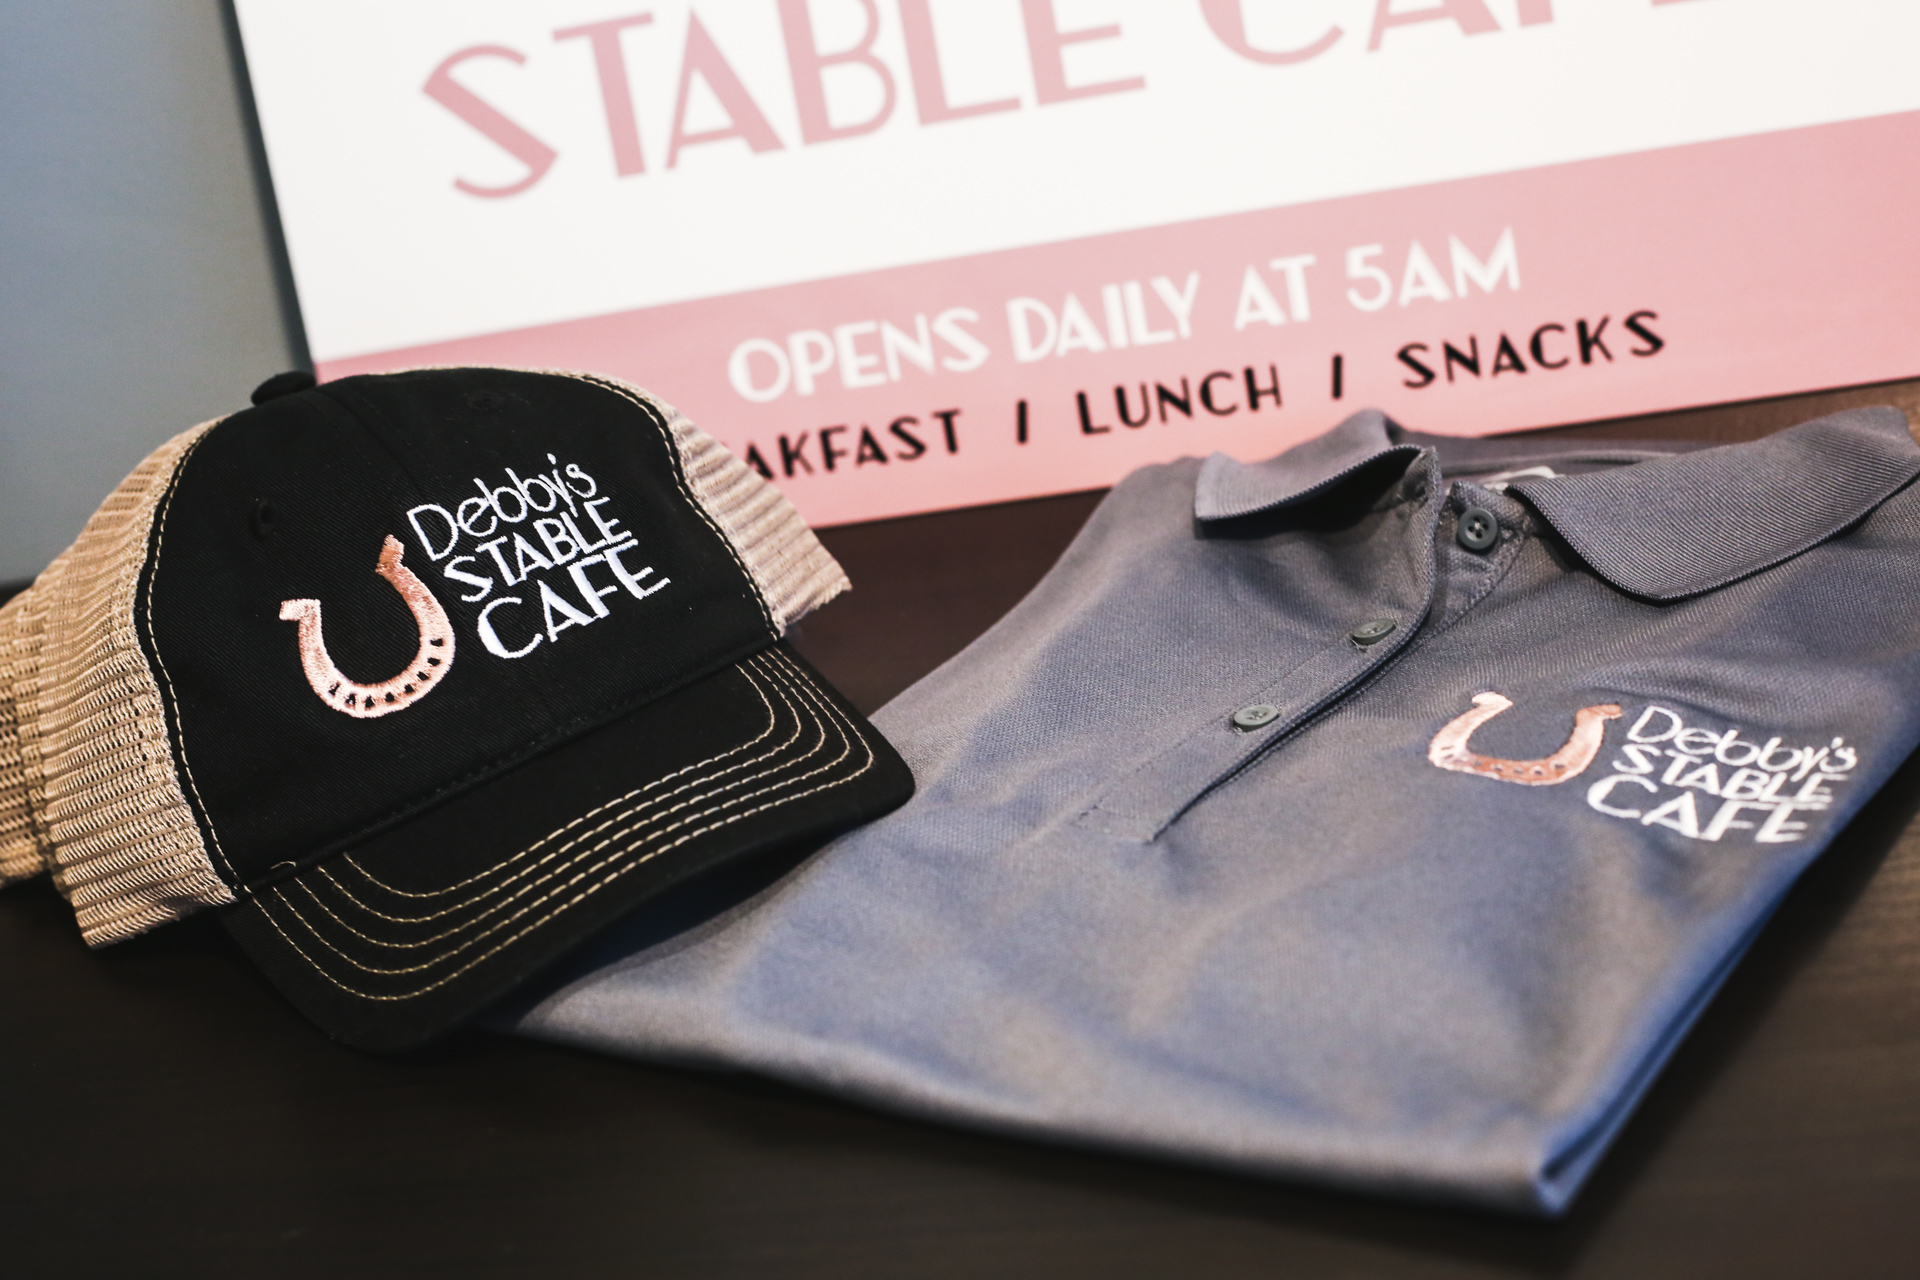 Custom Uniforms & Signage for Debby's Stable Cafe - IMAGEN